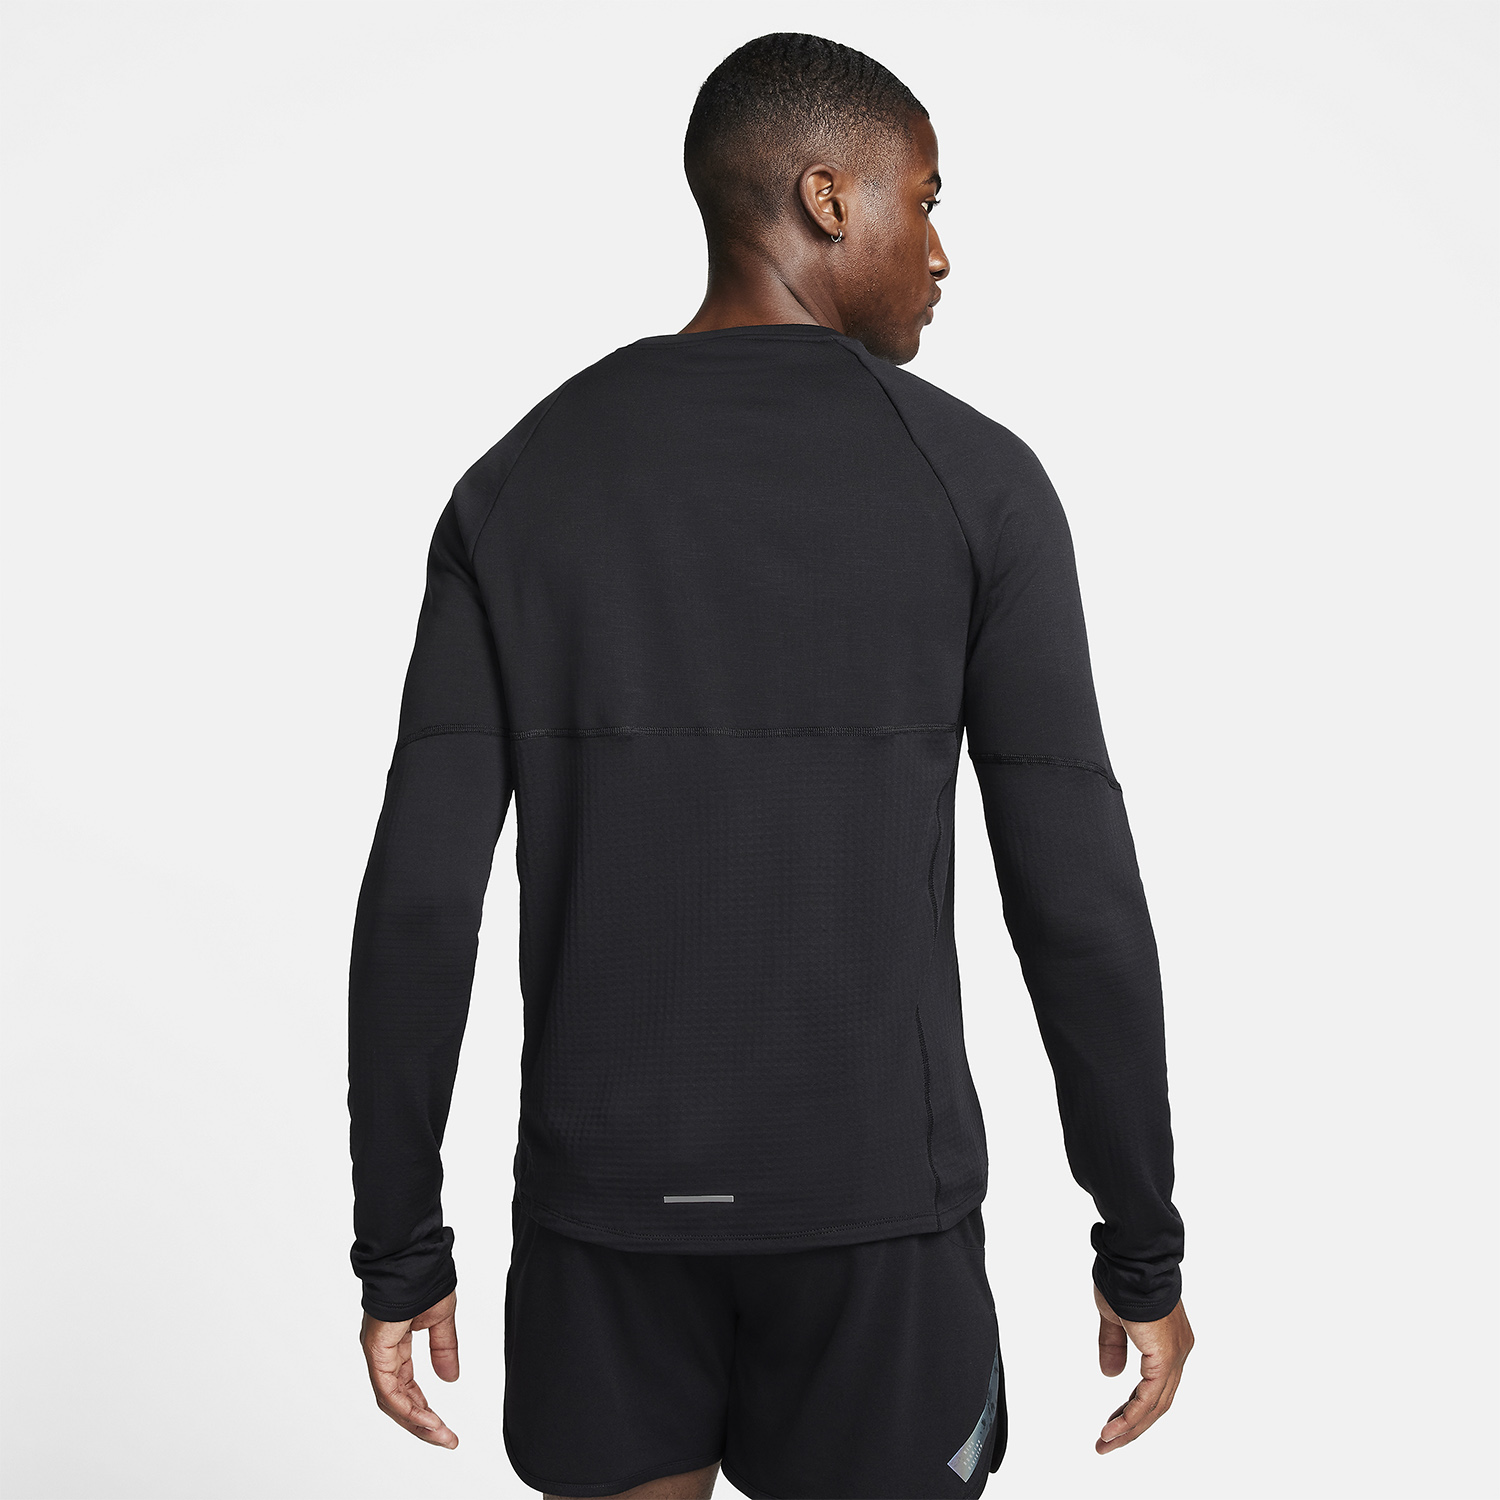 Nike Therma-FIT Crew Men's Running Shirt - Black